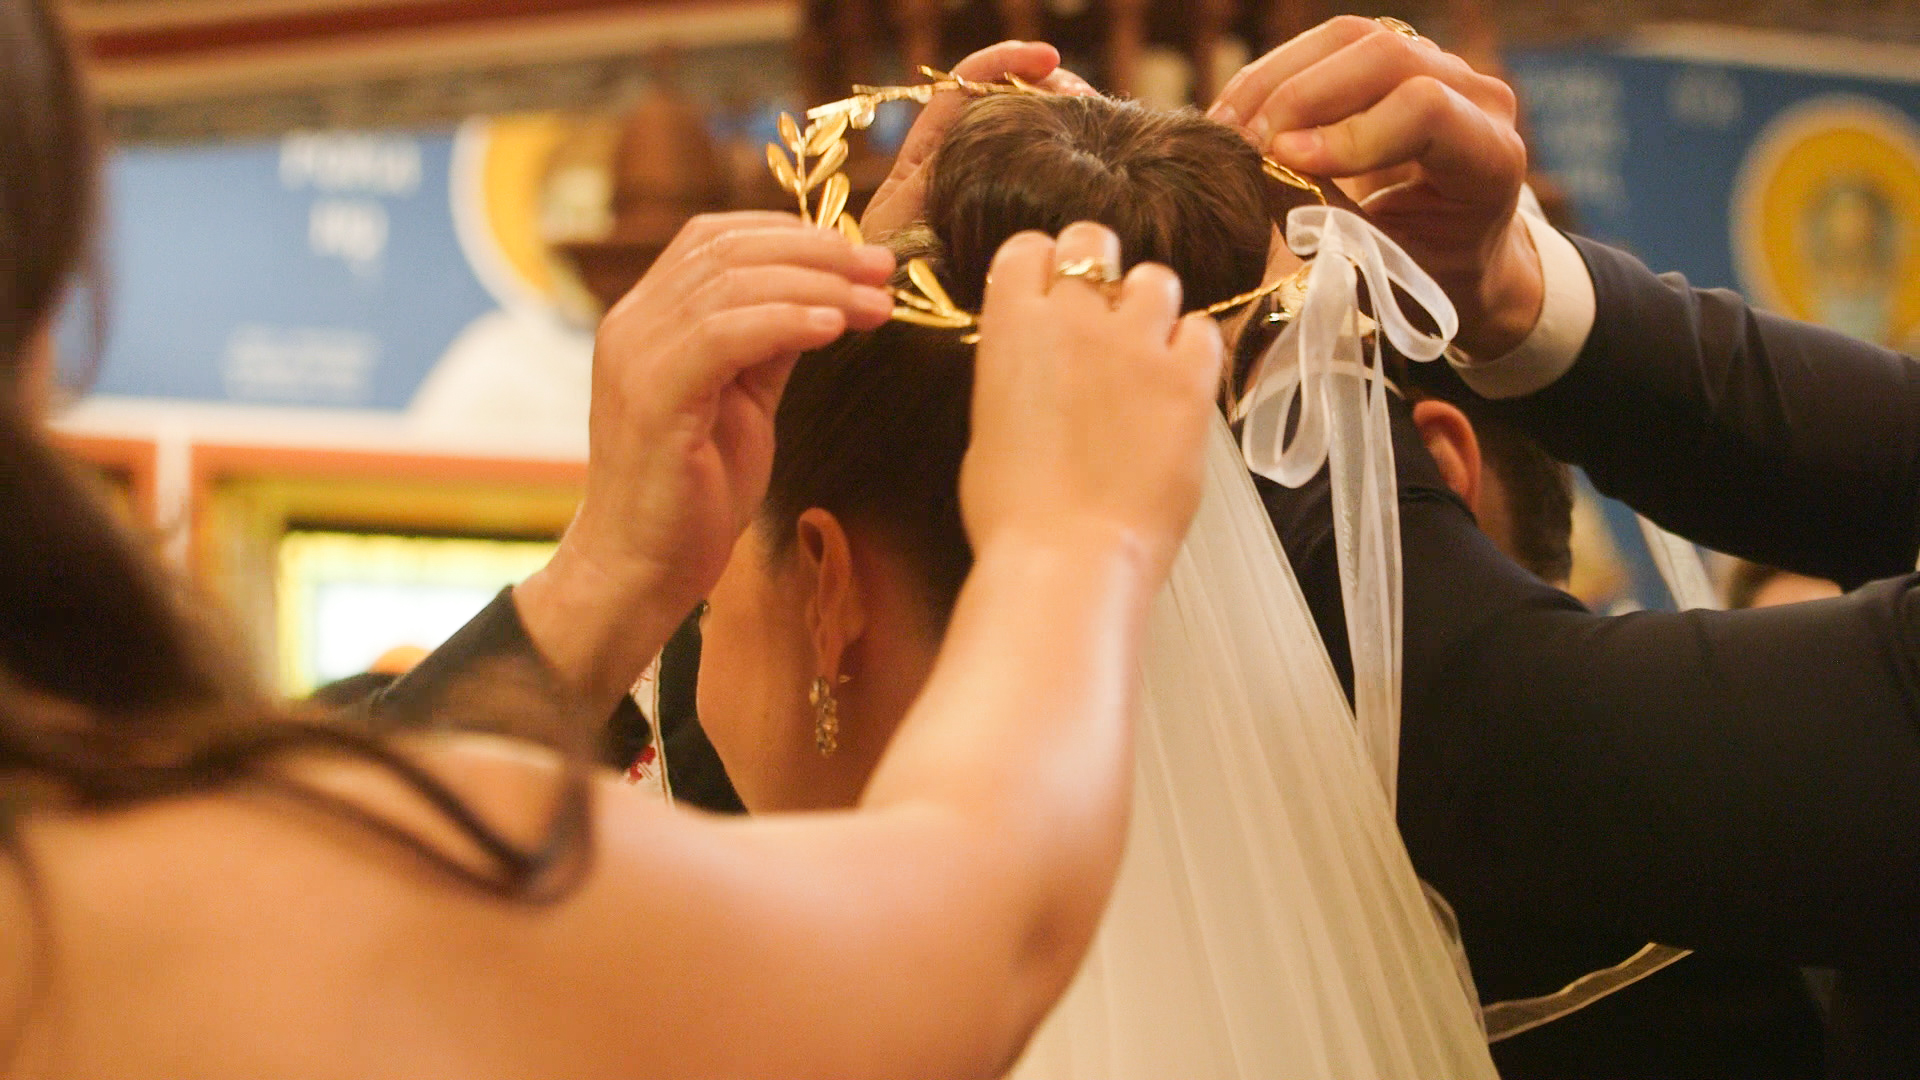 Wedding crown